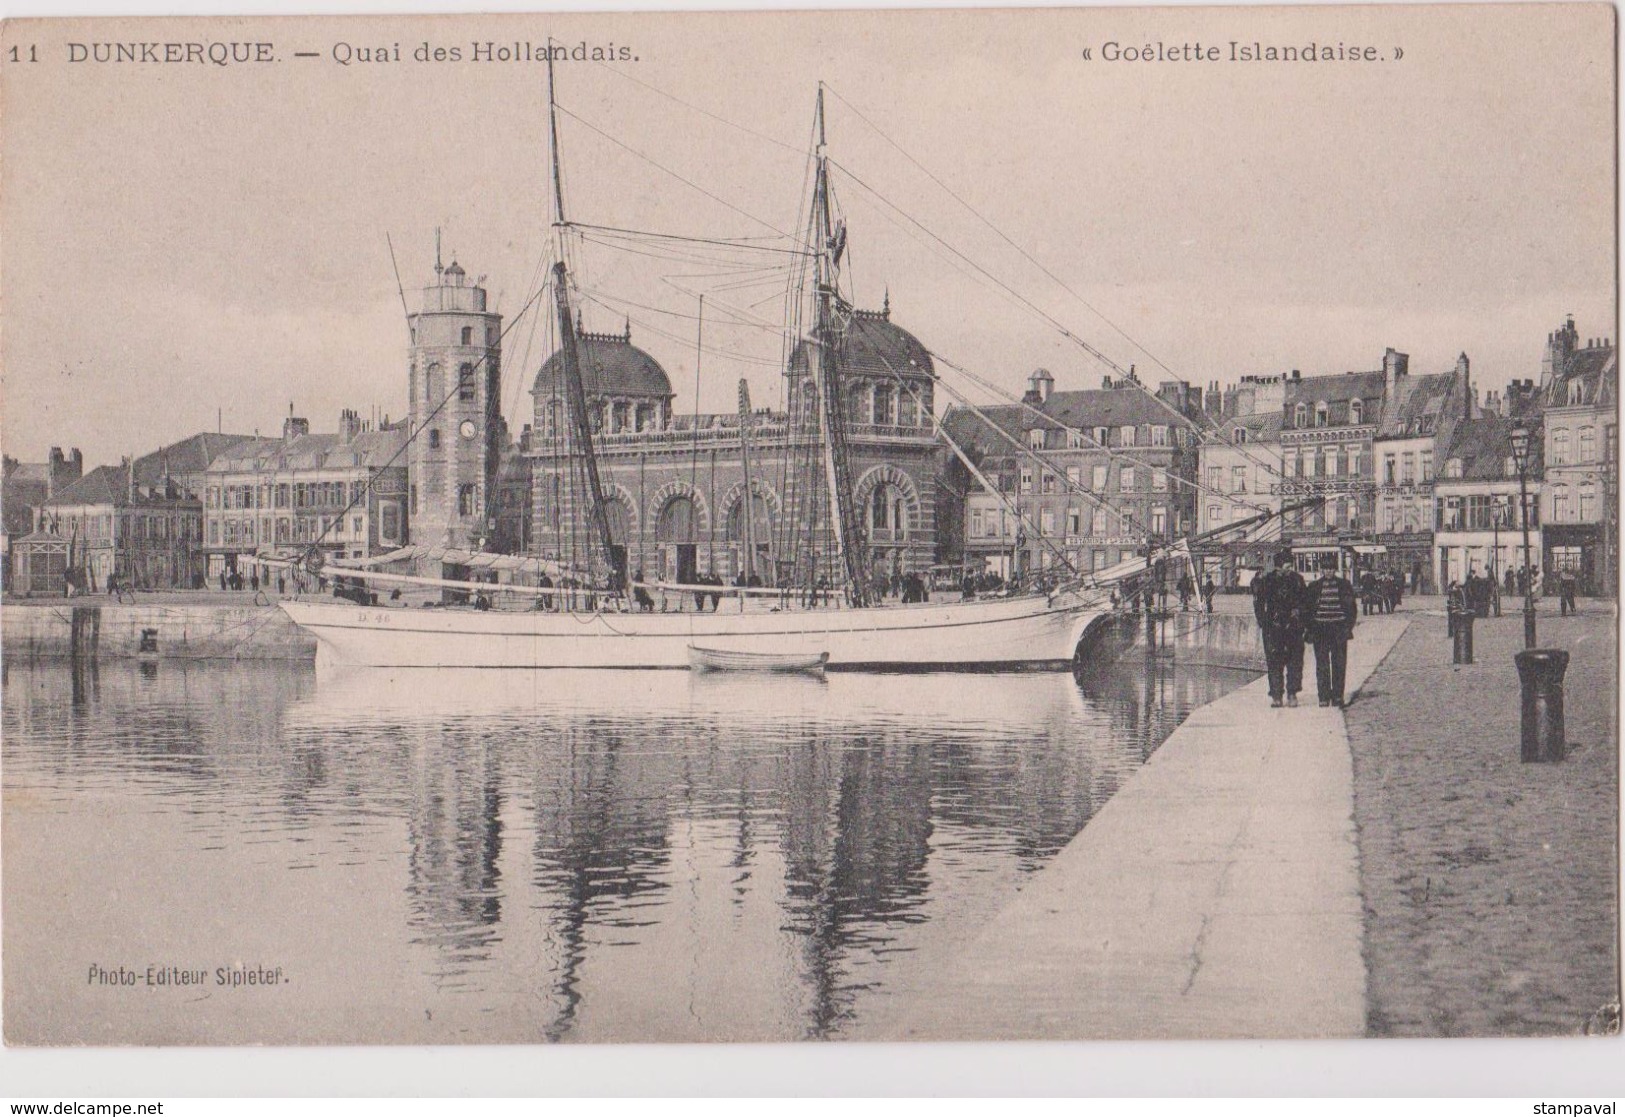 DUNKERQUE - QUAI DES HOLLANDAIS - GOELETTE ISLANDAISE - N° 11 - Segelboote